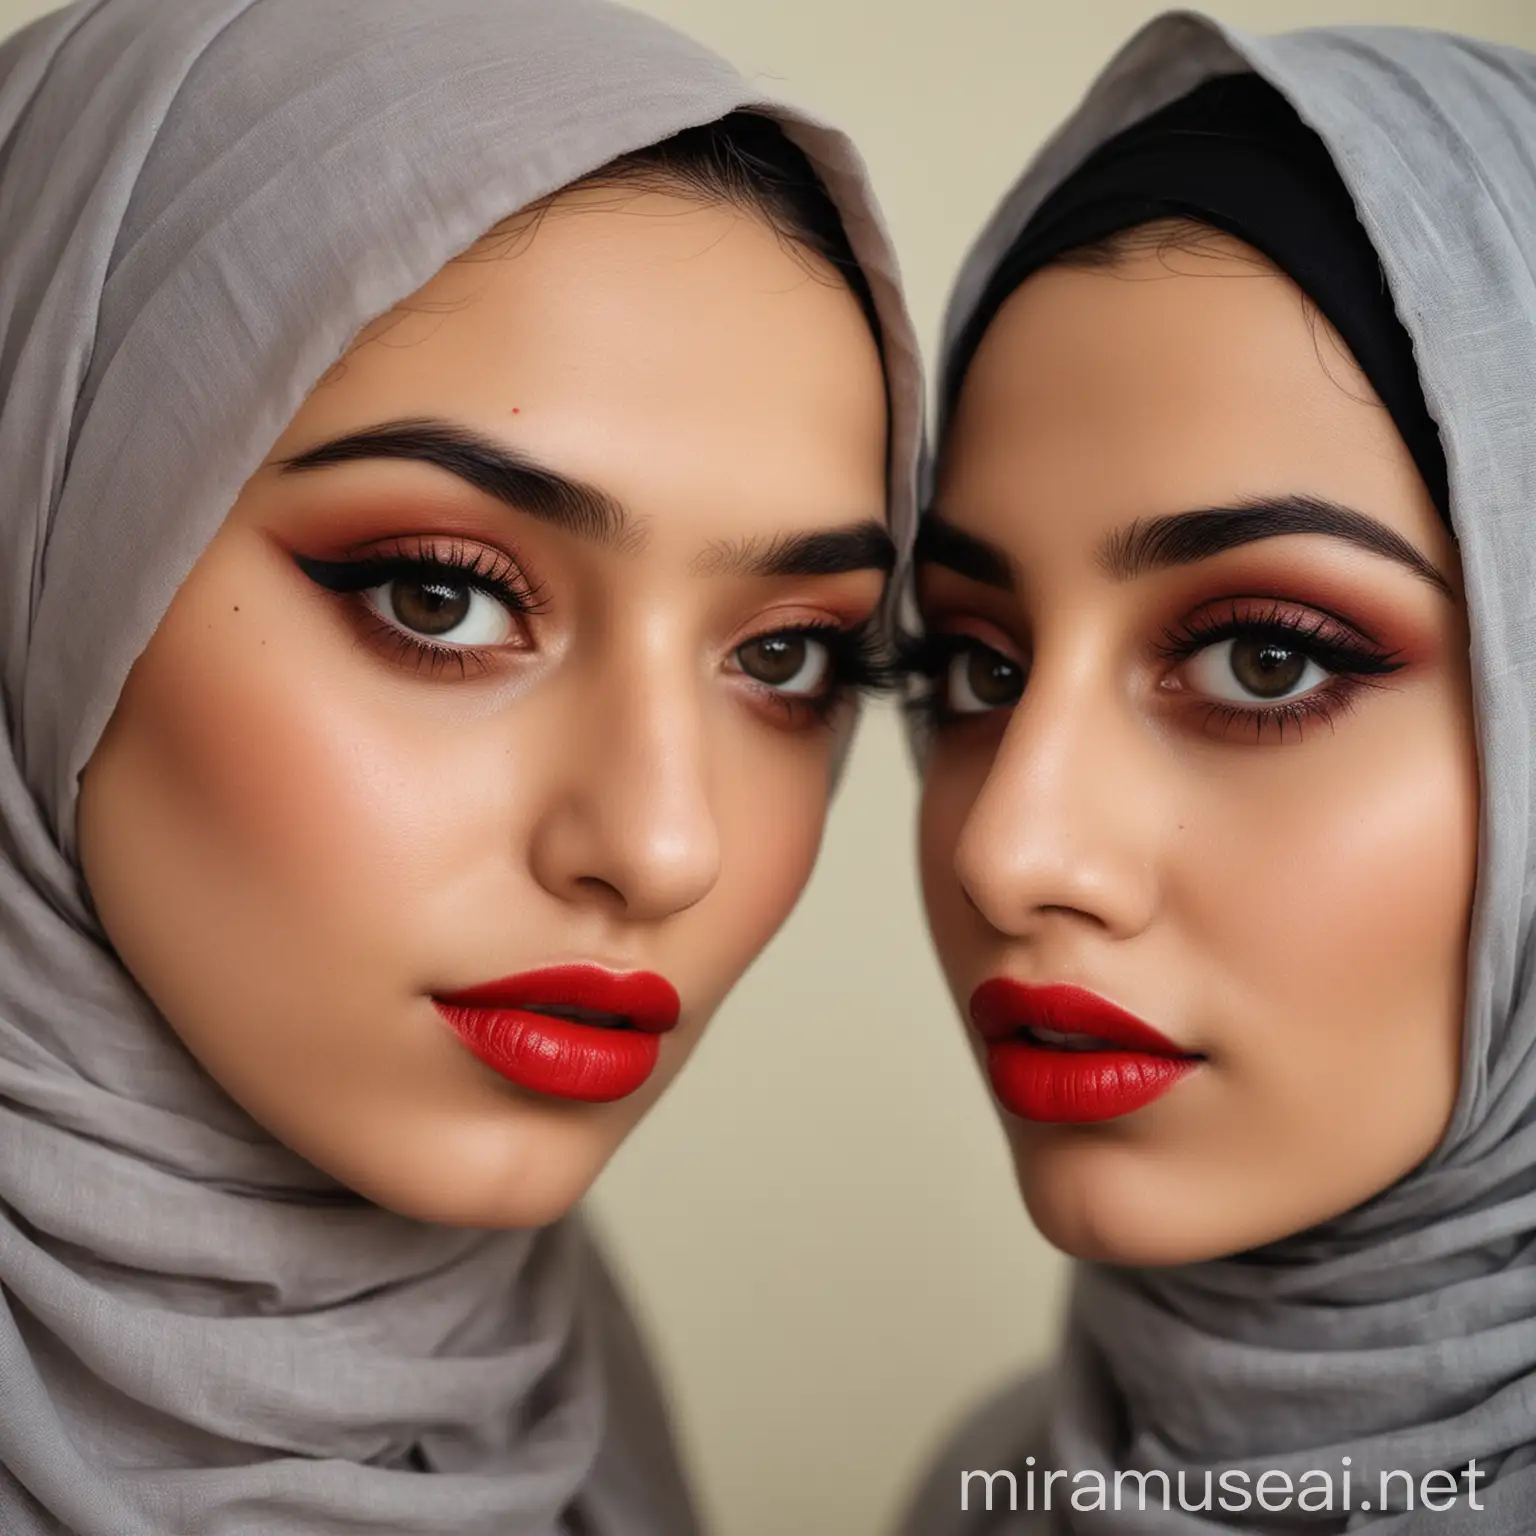 Iranian Hijabi Girls Embracing in Tender Kiss with Striking Facial Veins